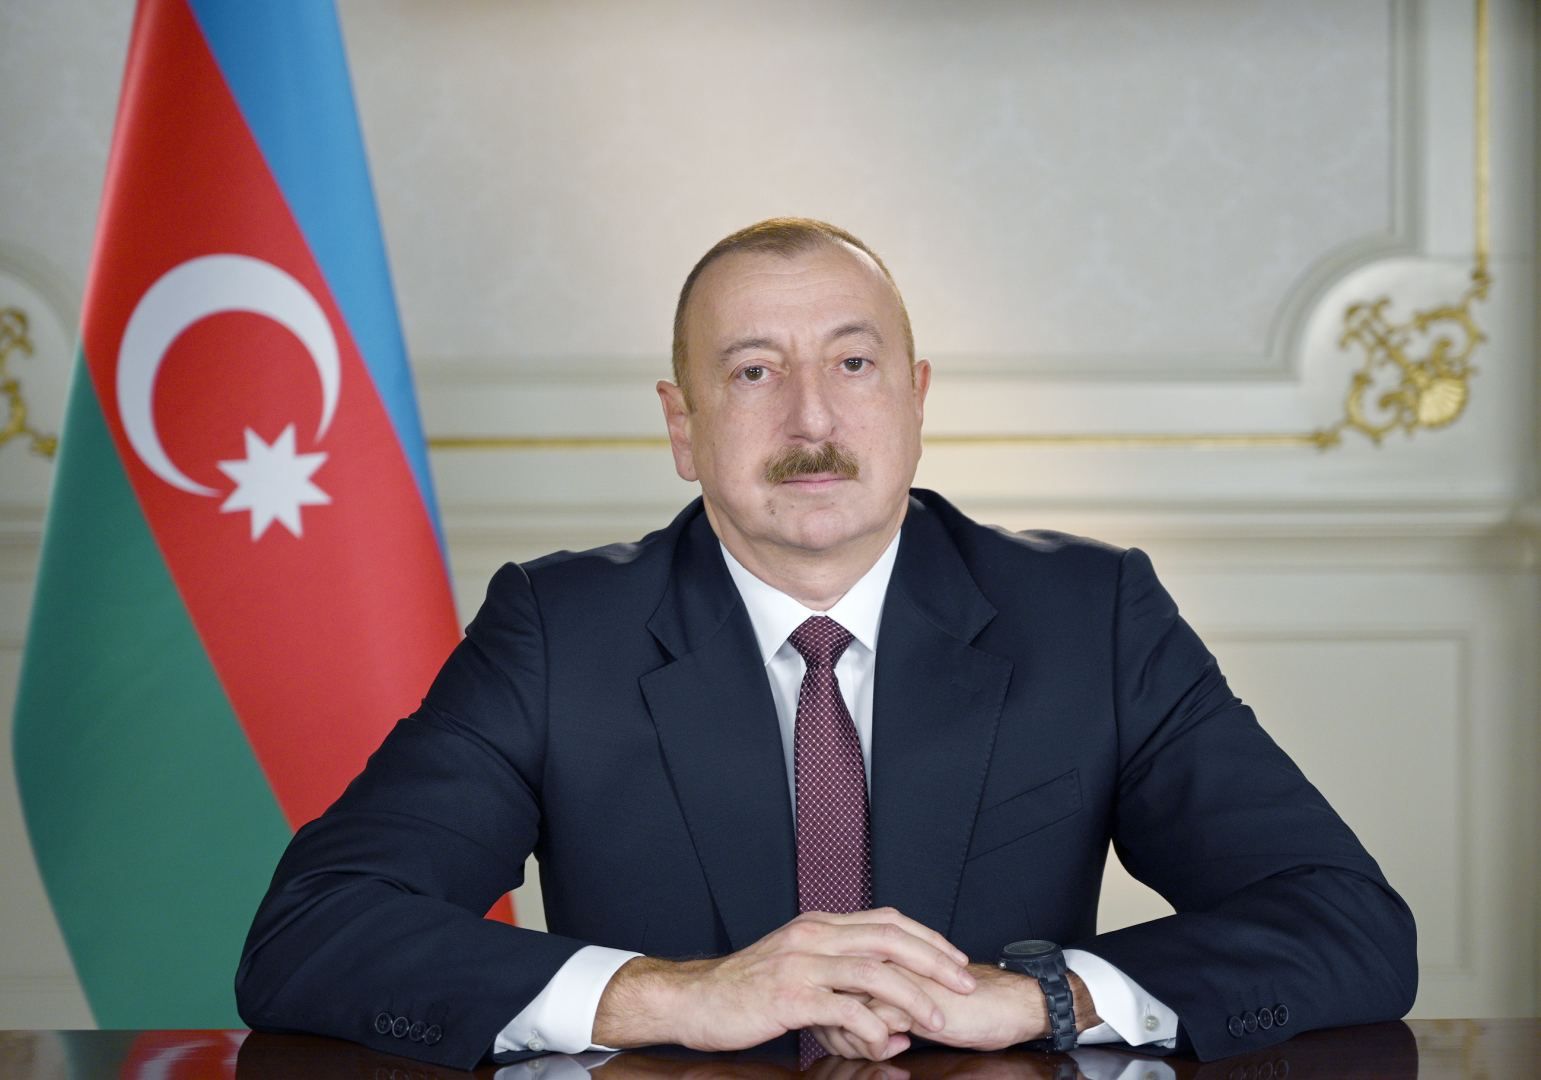 Amendments made to charter of Azerbaijan's Land Transport Agency - decree